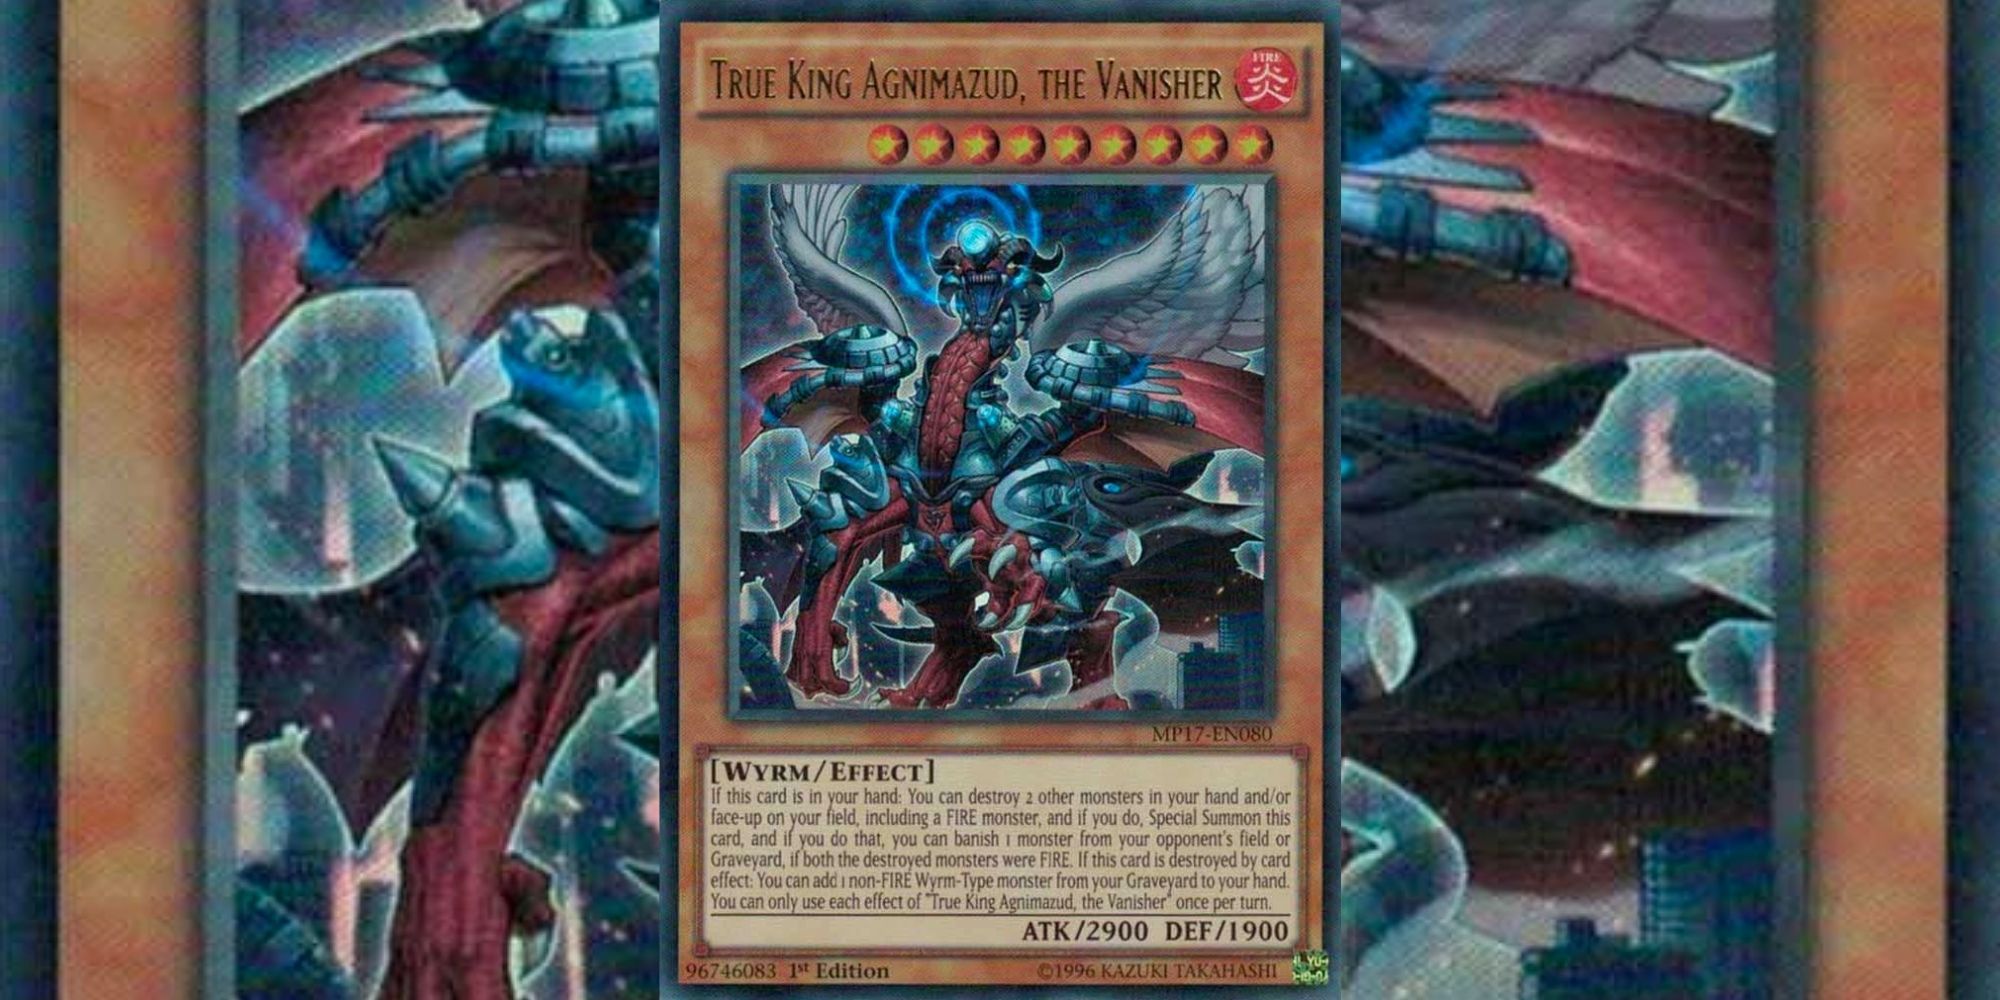 True King Agnimazud, the Vanisher card in Yu-Gi-Oh!